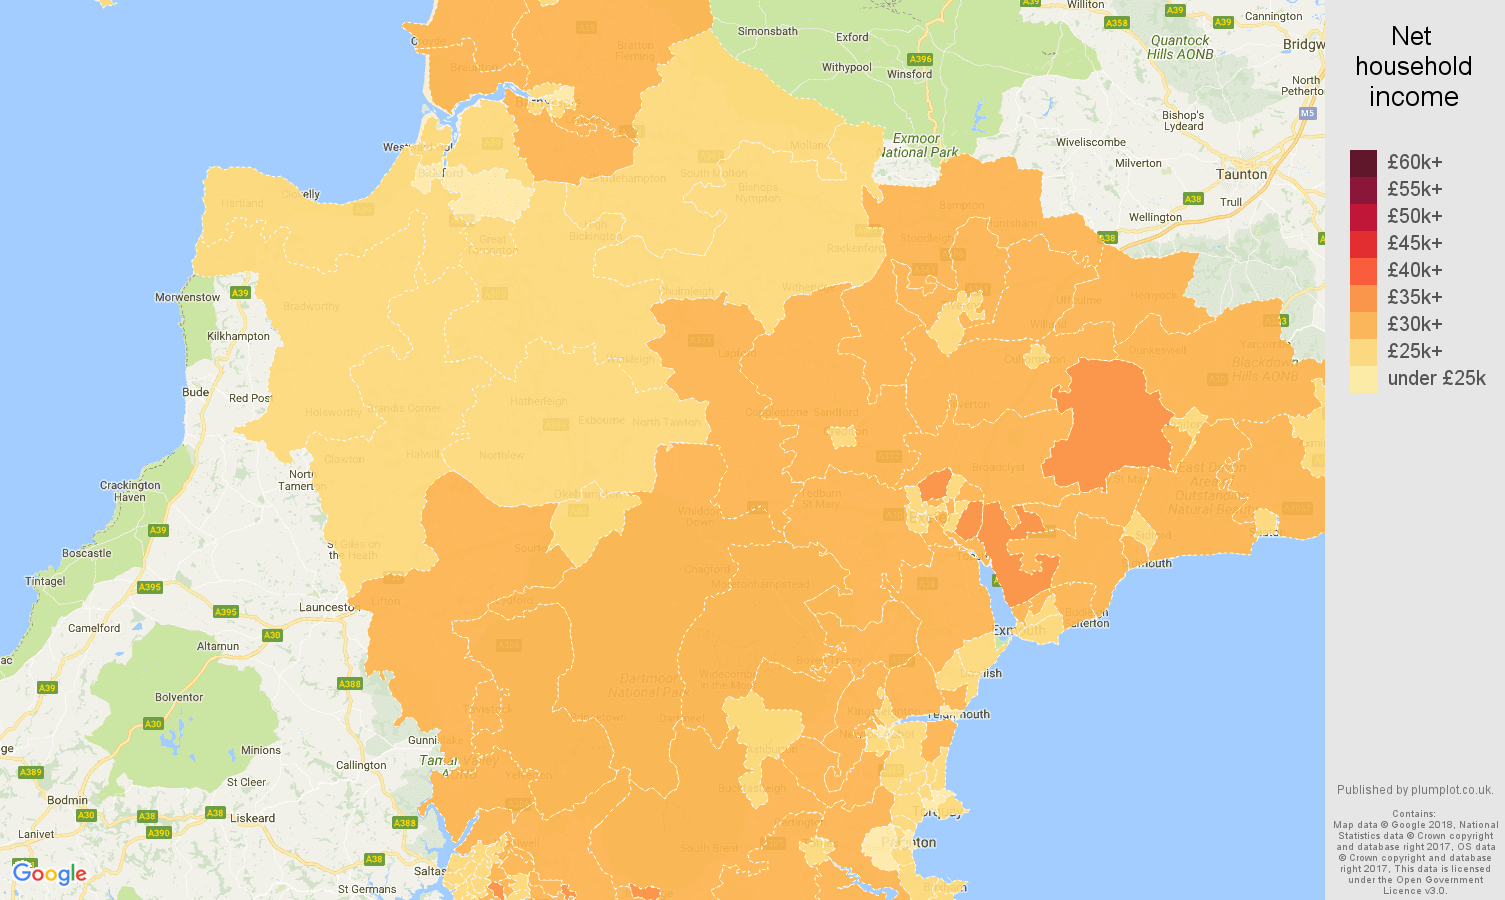 Devon net household income map